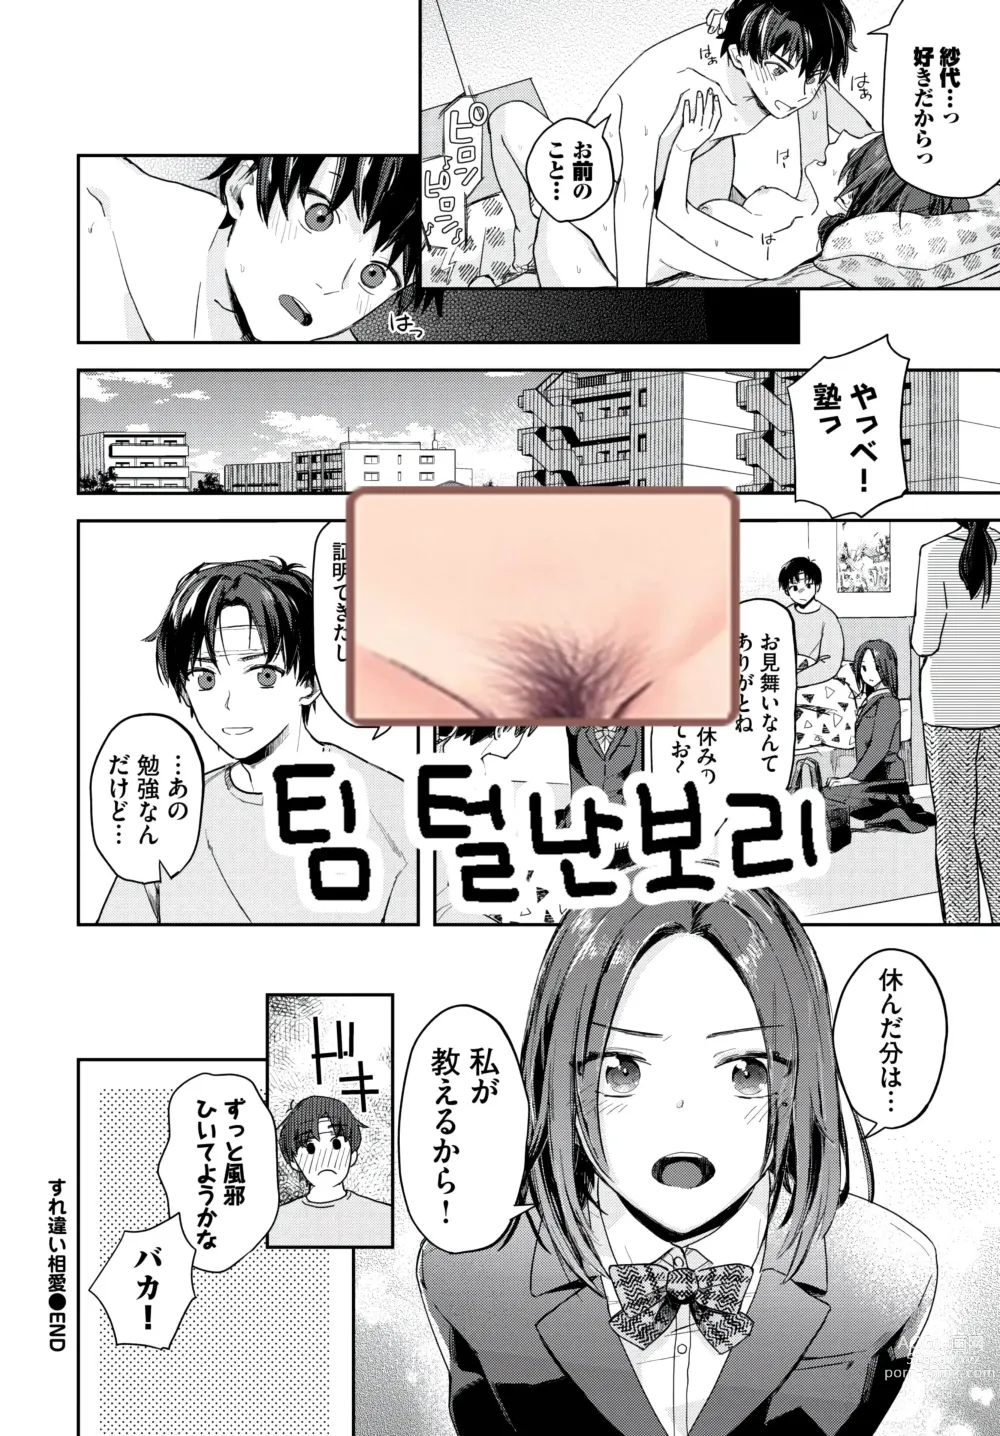 Page 21 of manga Surechigai Souai